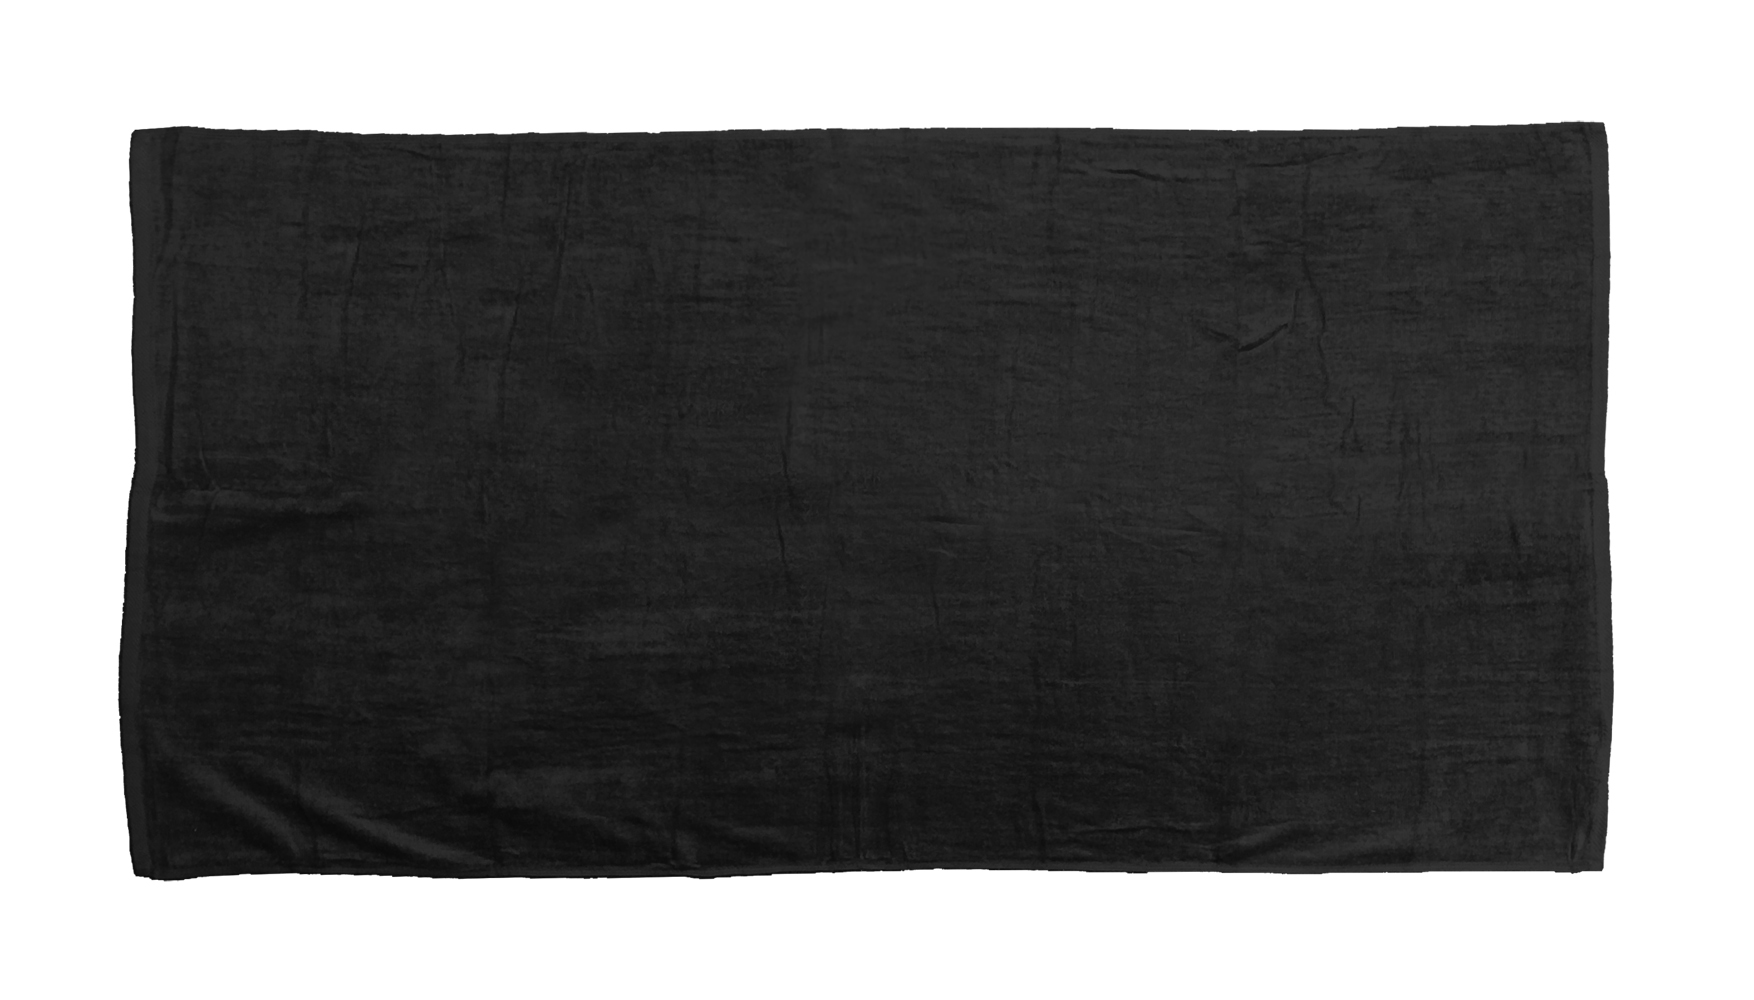 MWM-07202 M - Cotton velour monogram towel () - White/Black - The